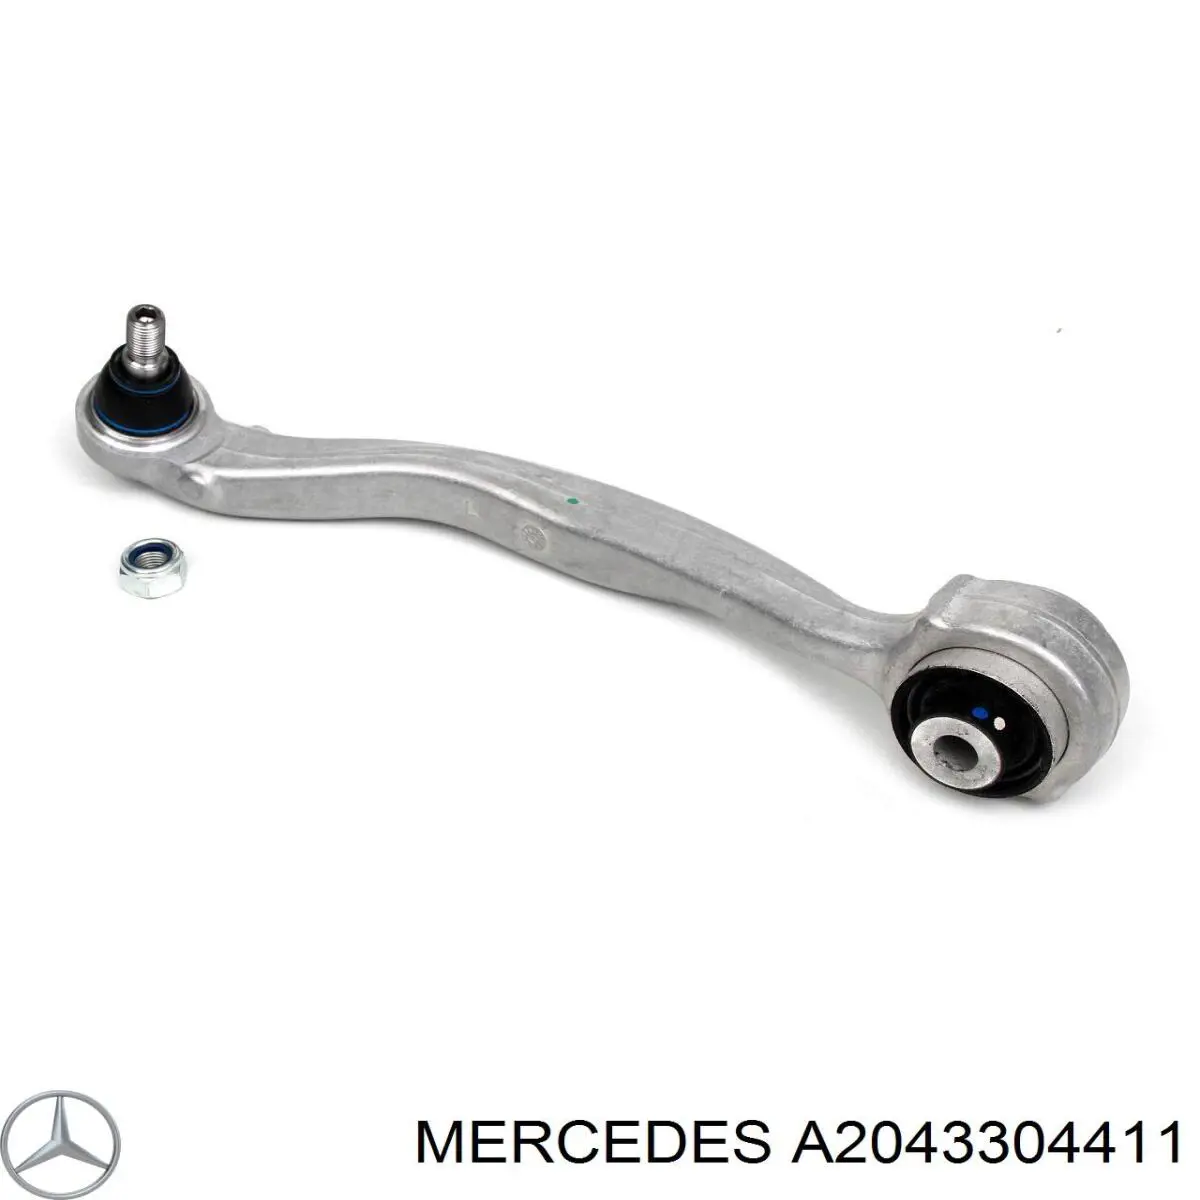 A2043304411 Mercedes barra oscilante, suspensión de ruedas delantera, superior derecha